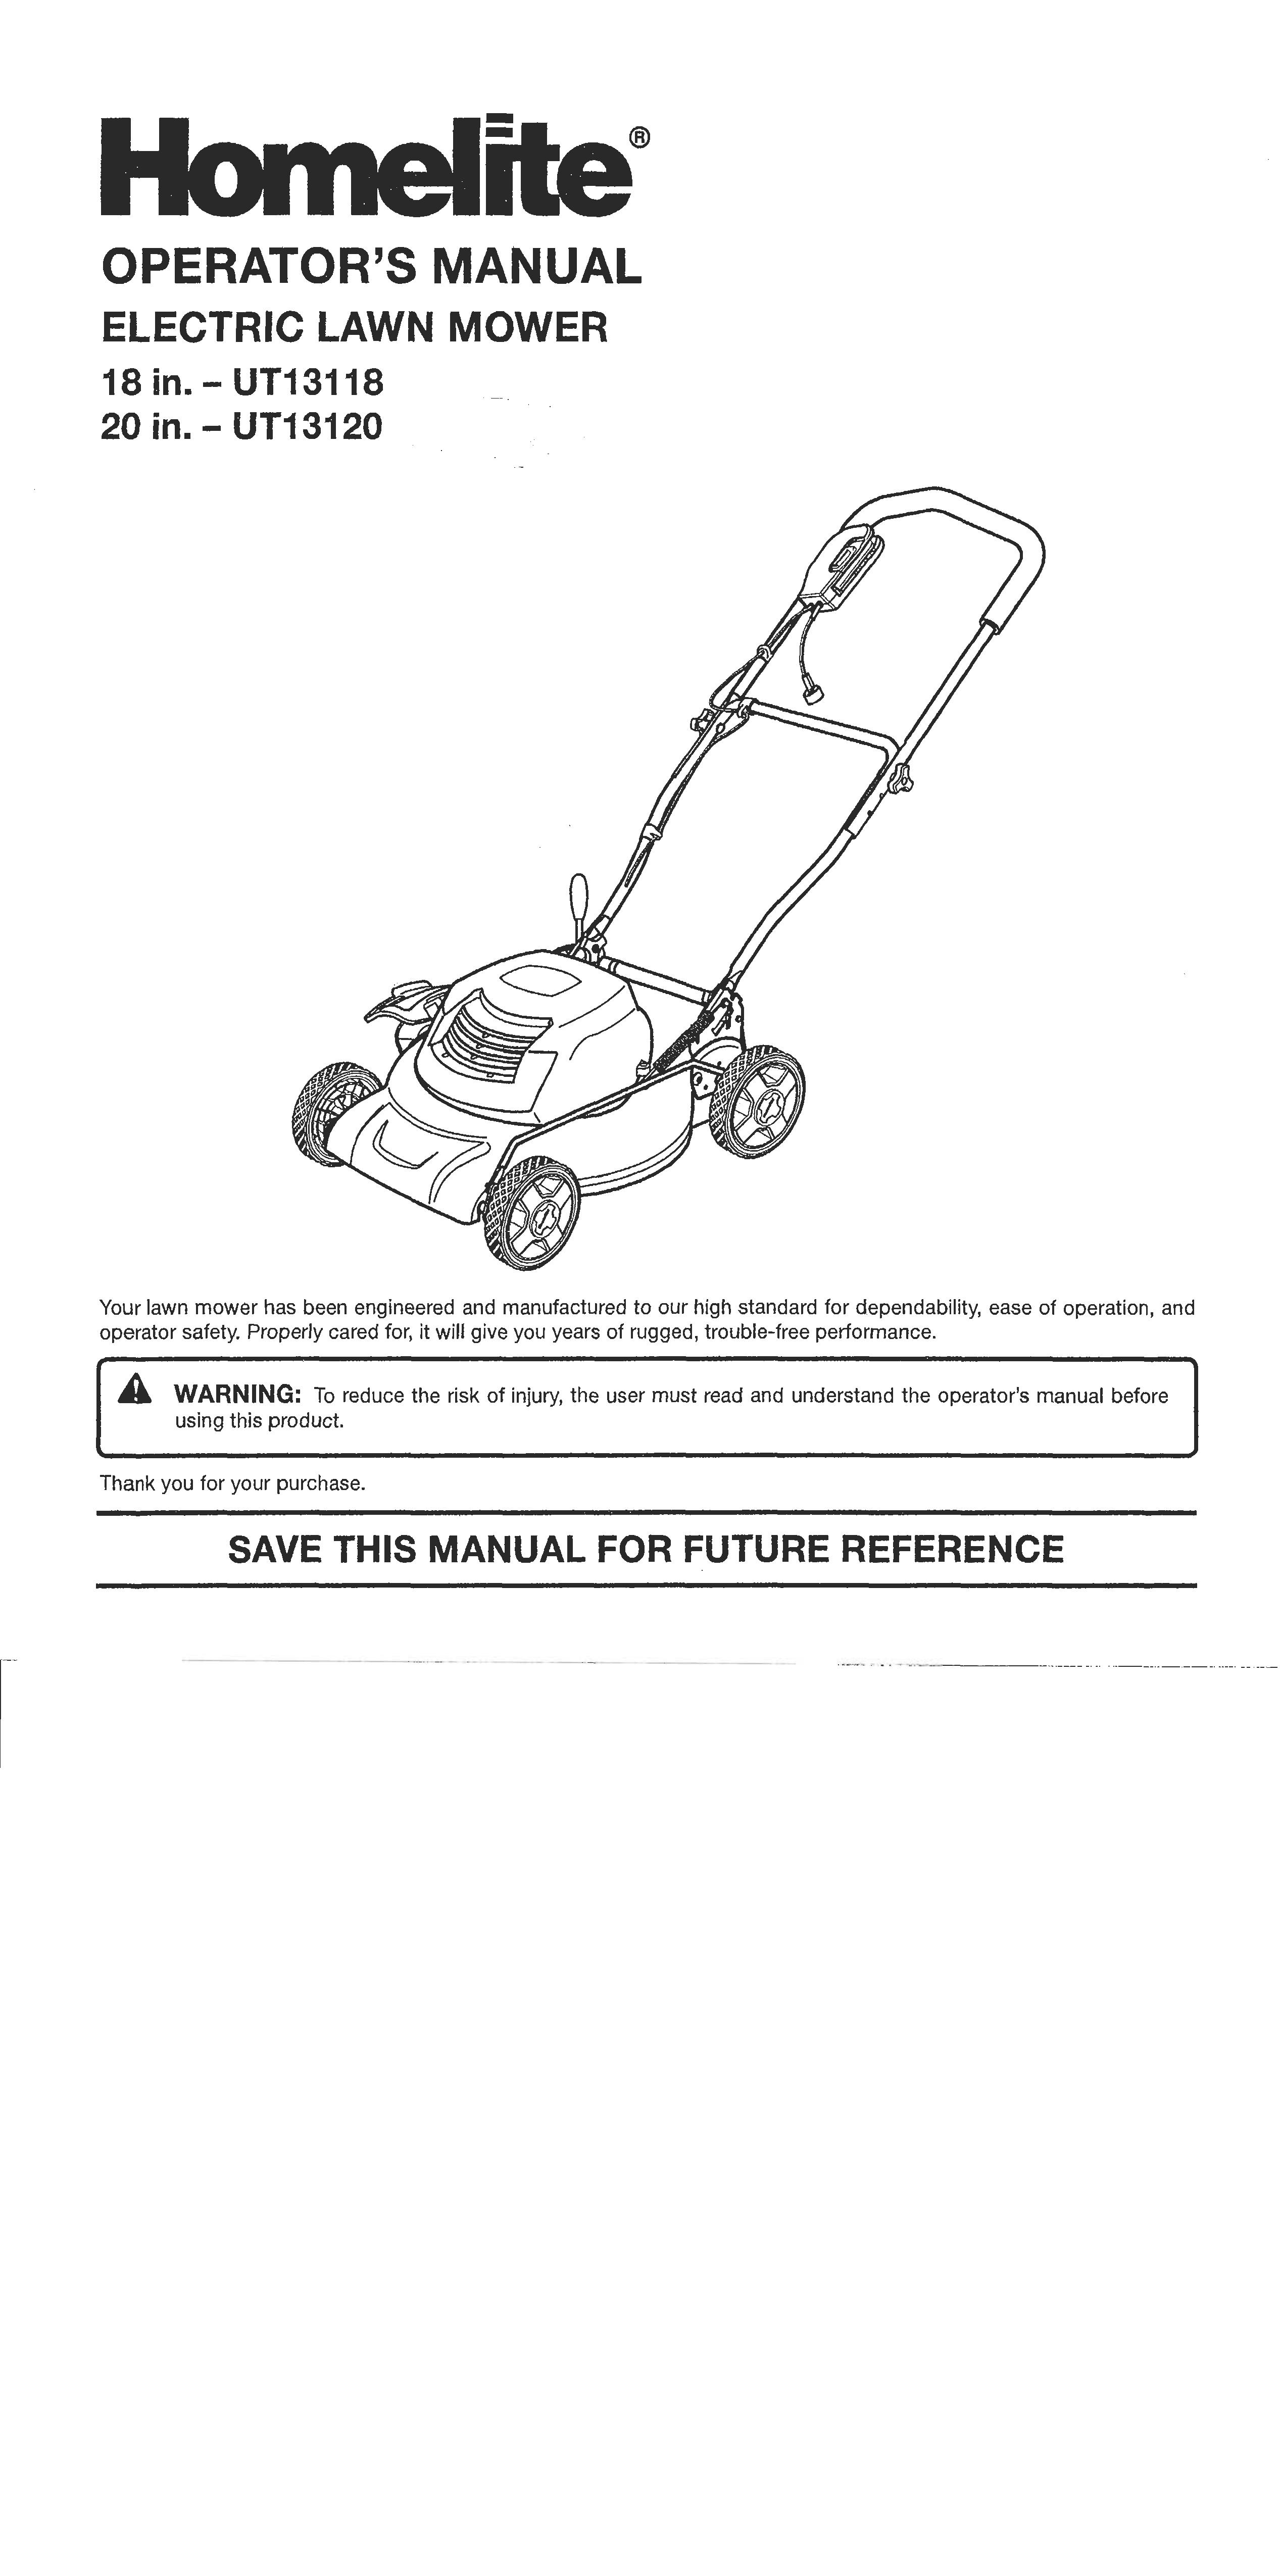 American Lawn Mower Co. UT13120 Lawn Mower User Manual